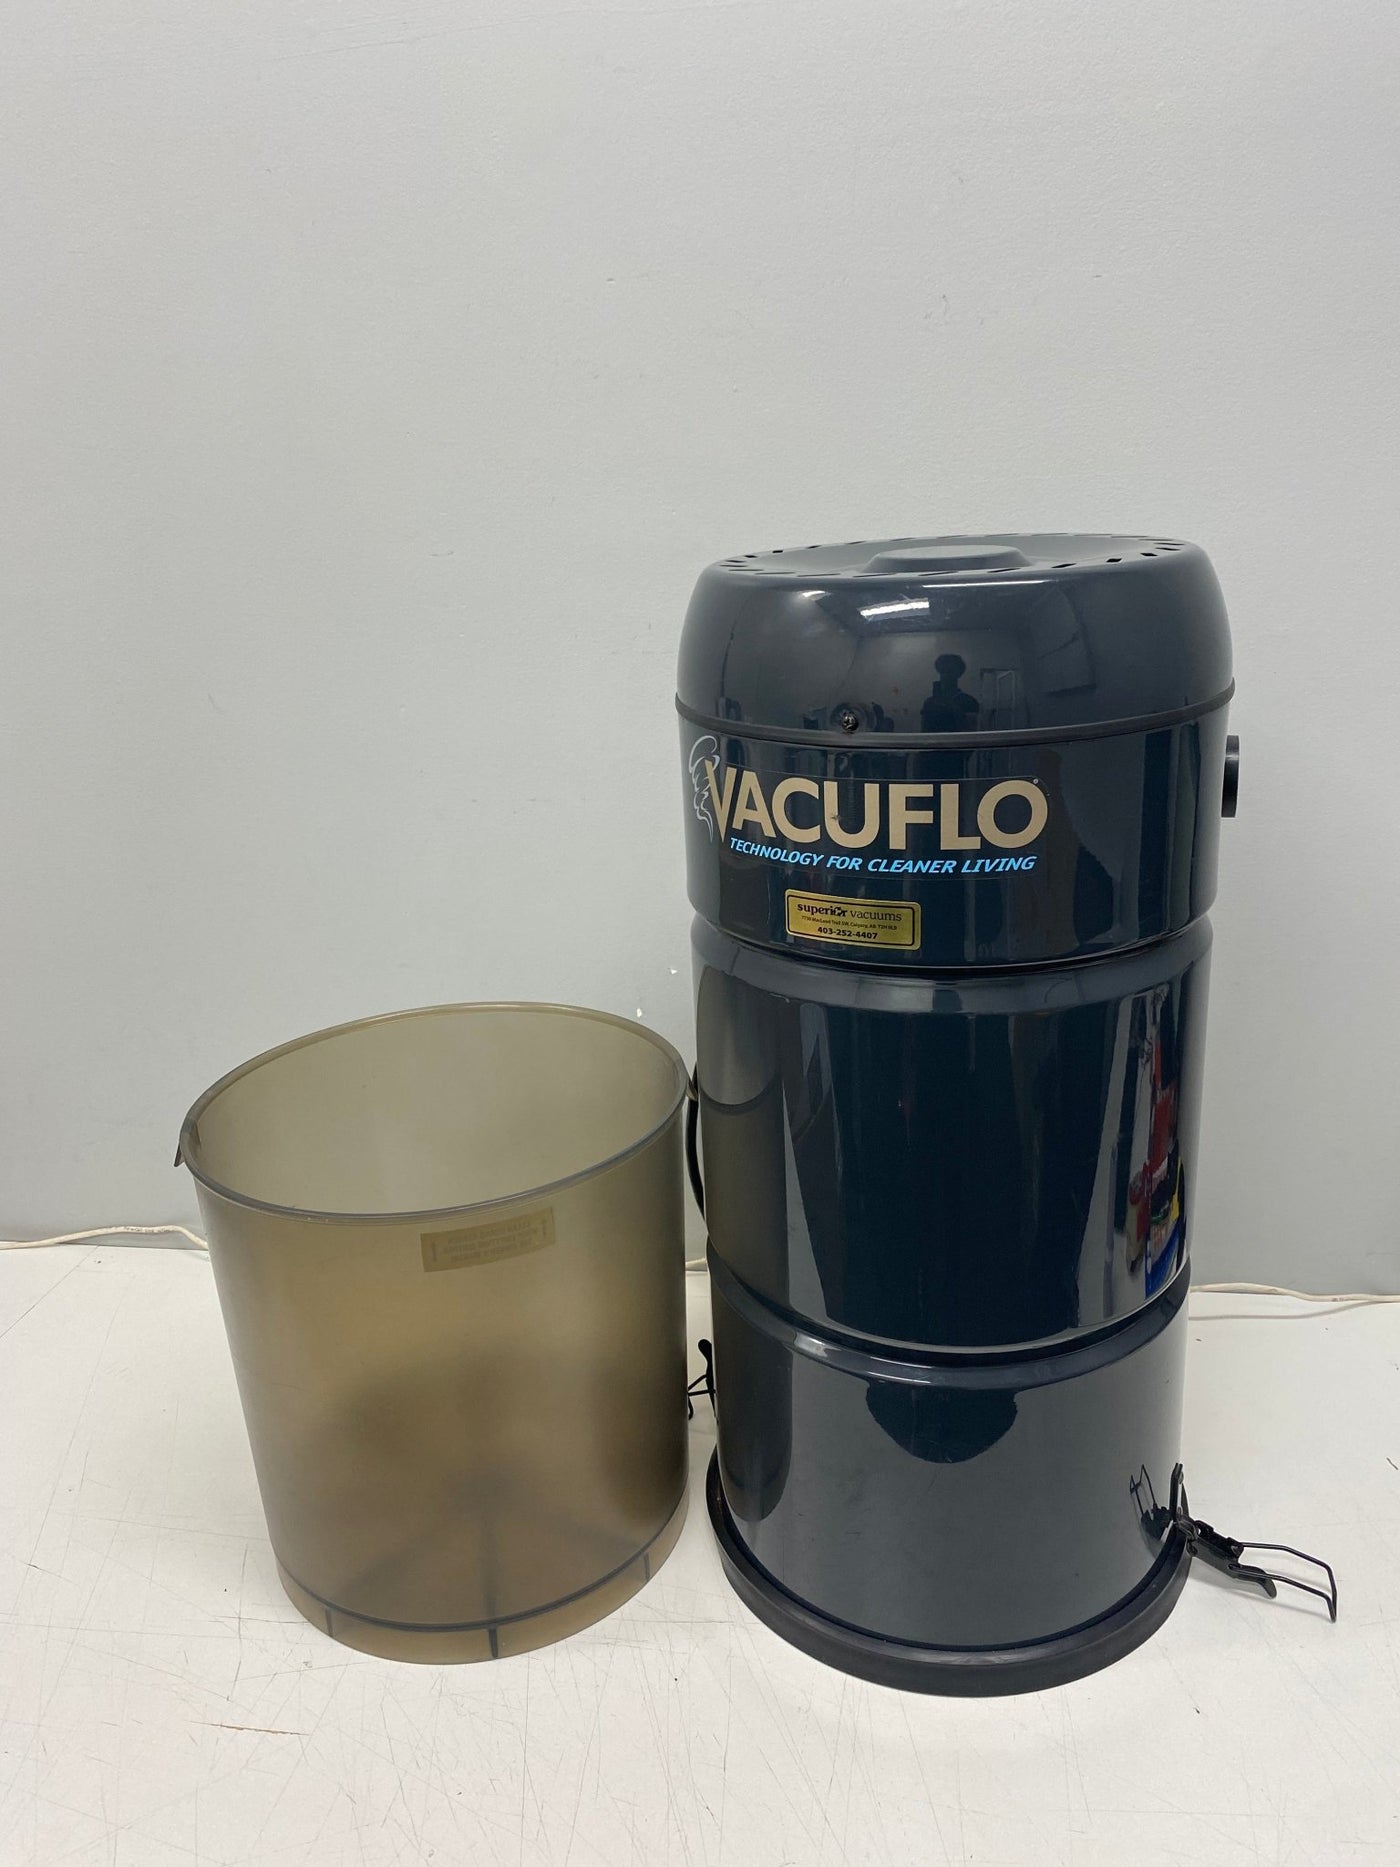 Mint Condition Vacuflo 460 Central Vacuum with Original Parts and Minimal Wear